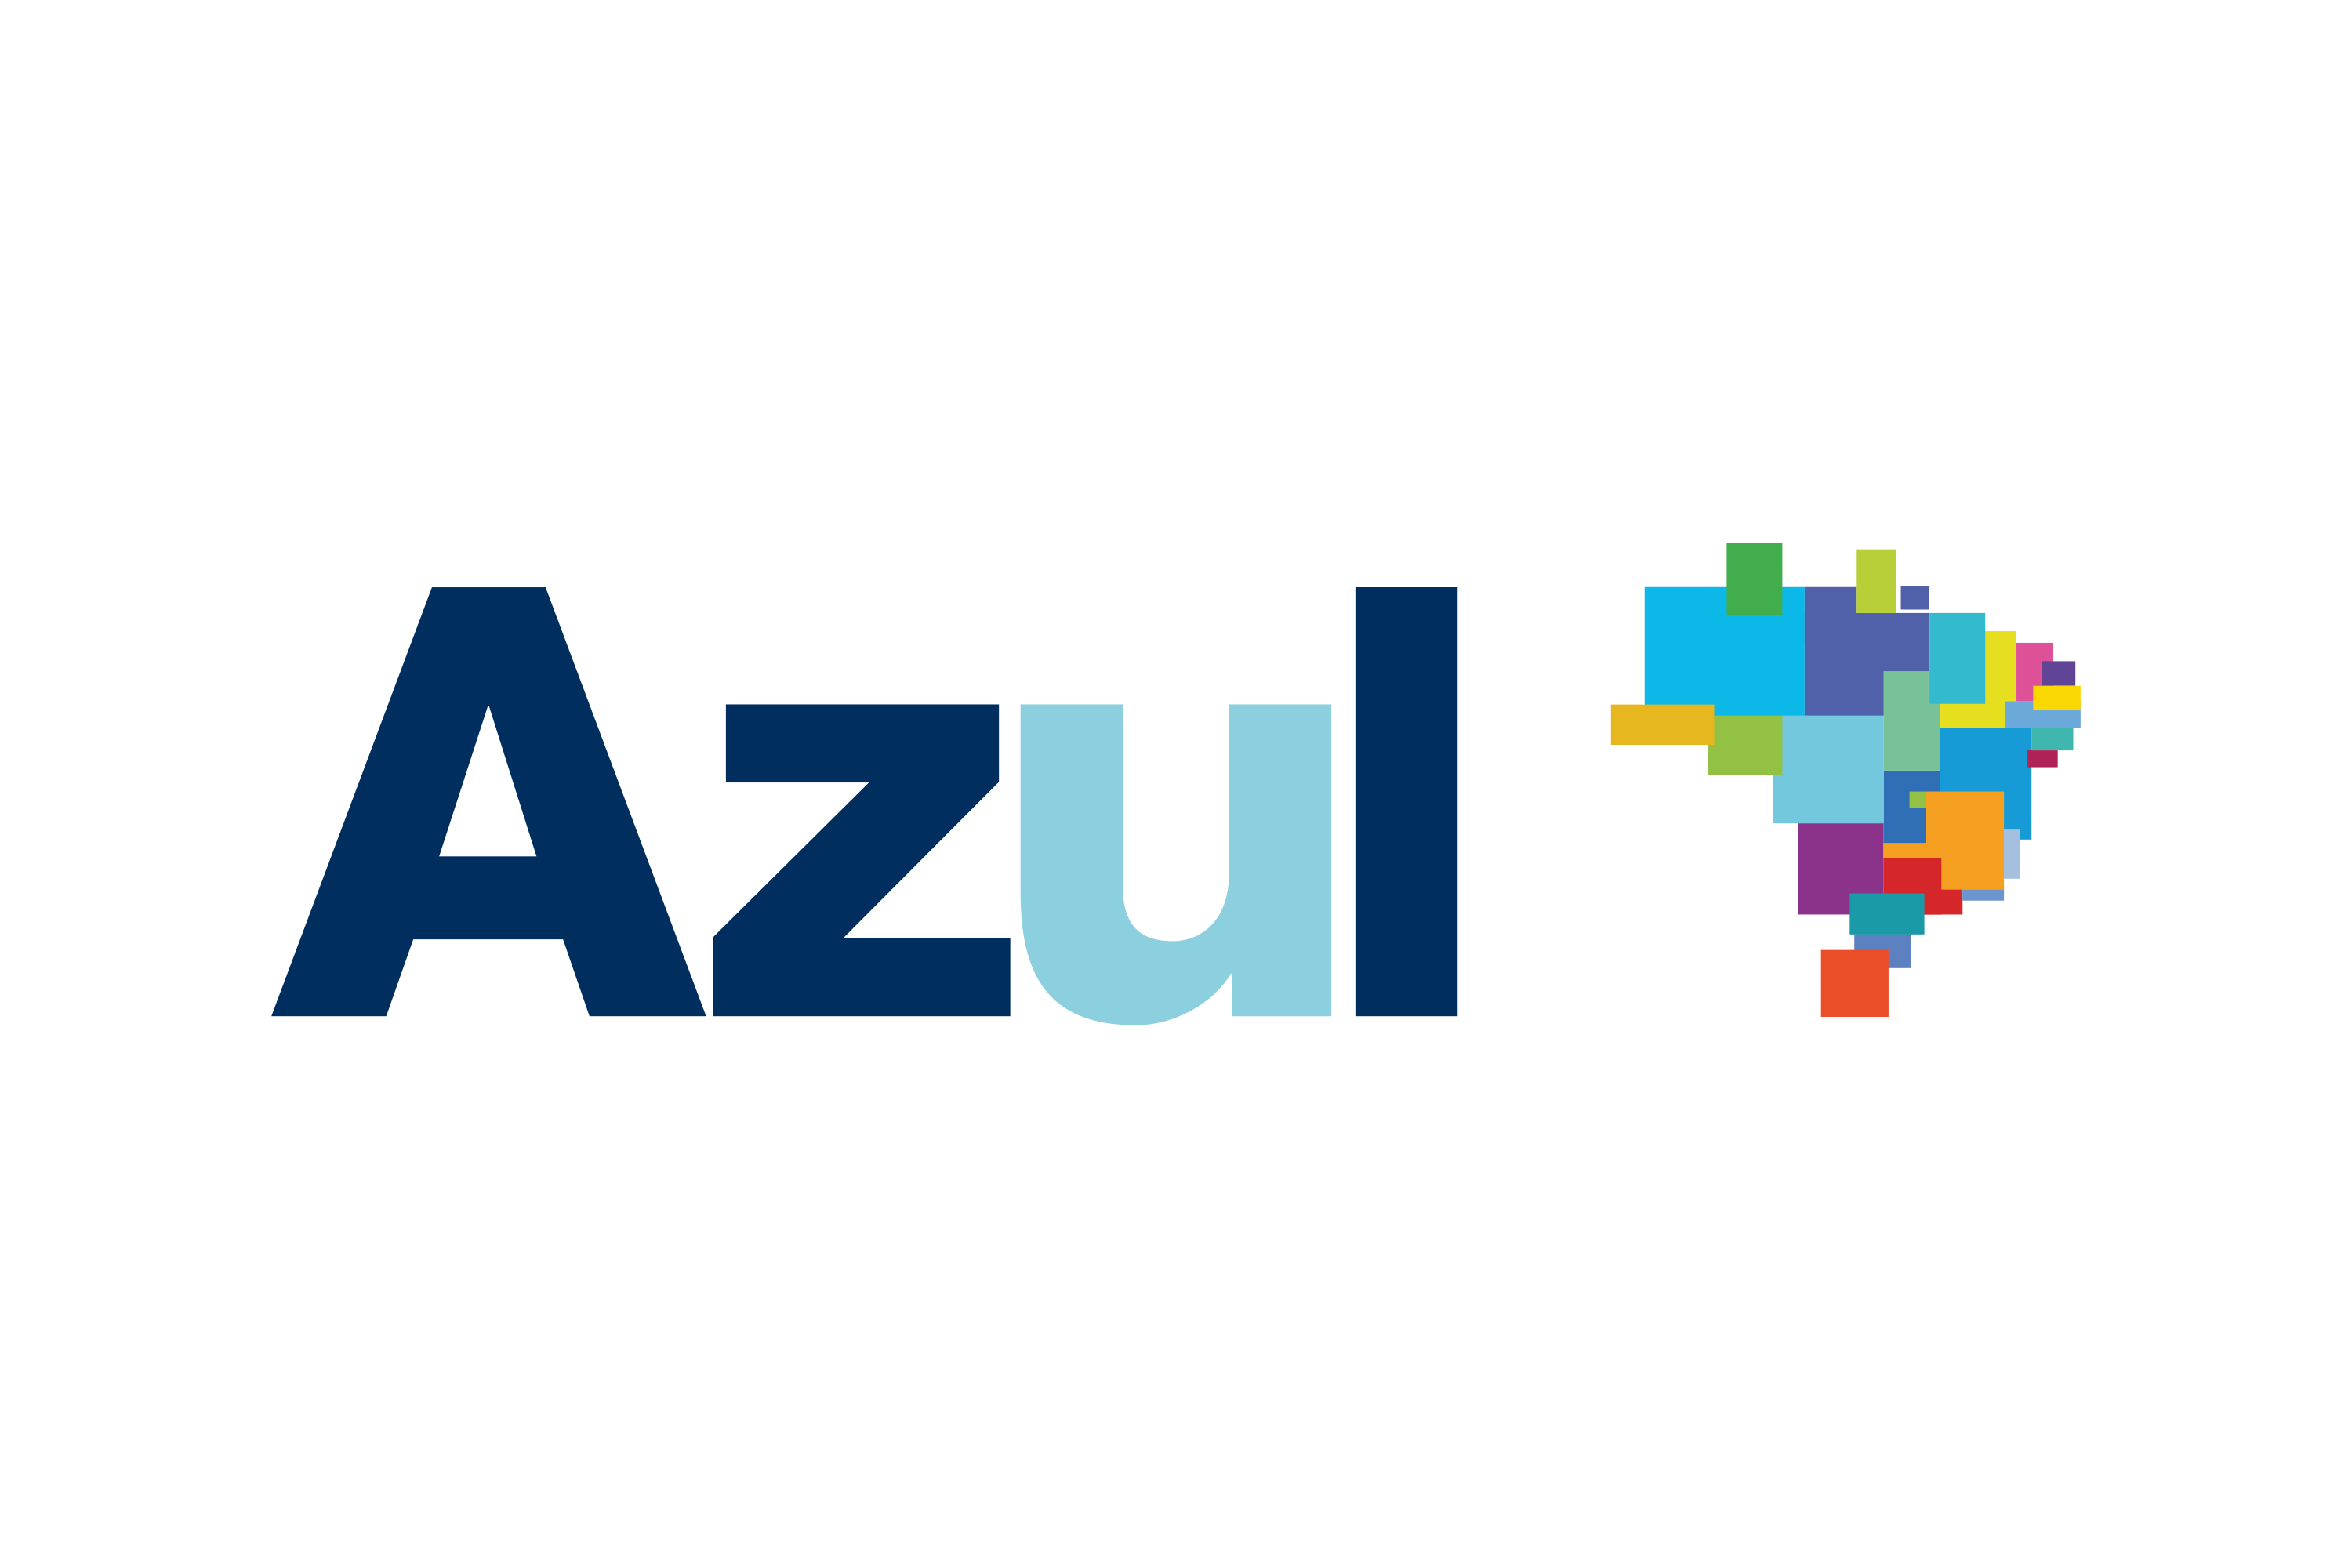 Download Azul Brazilian Airlines Azul Linhas Aereas Brasileiras S A Logo In Svg Vector Or Png File Format Logo Wine